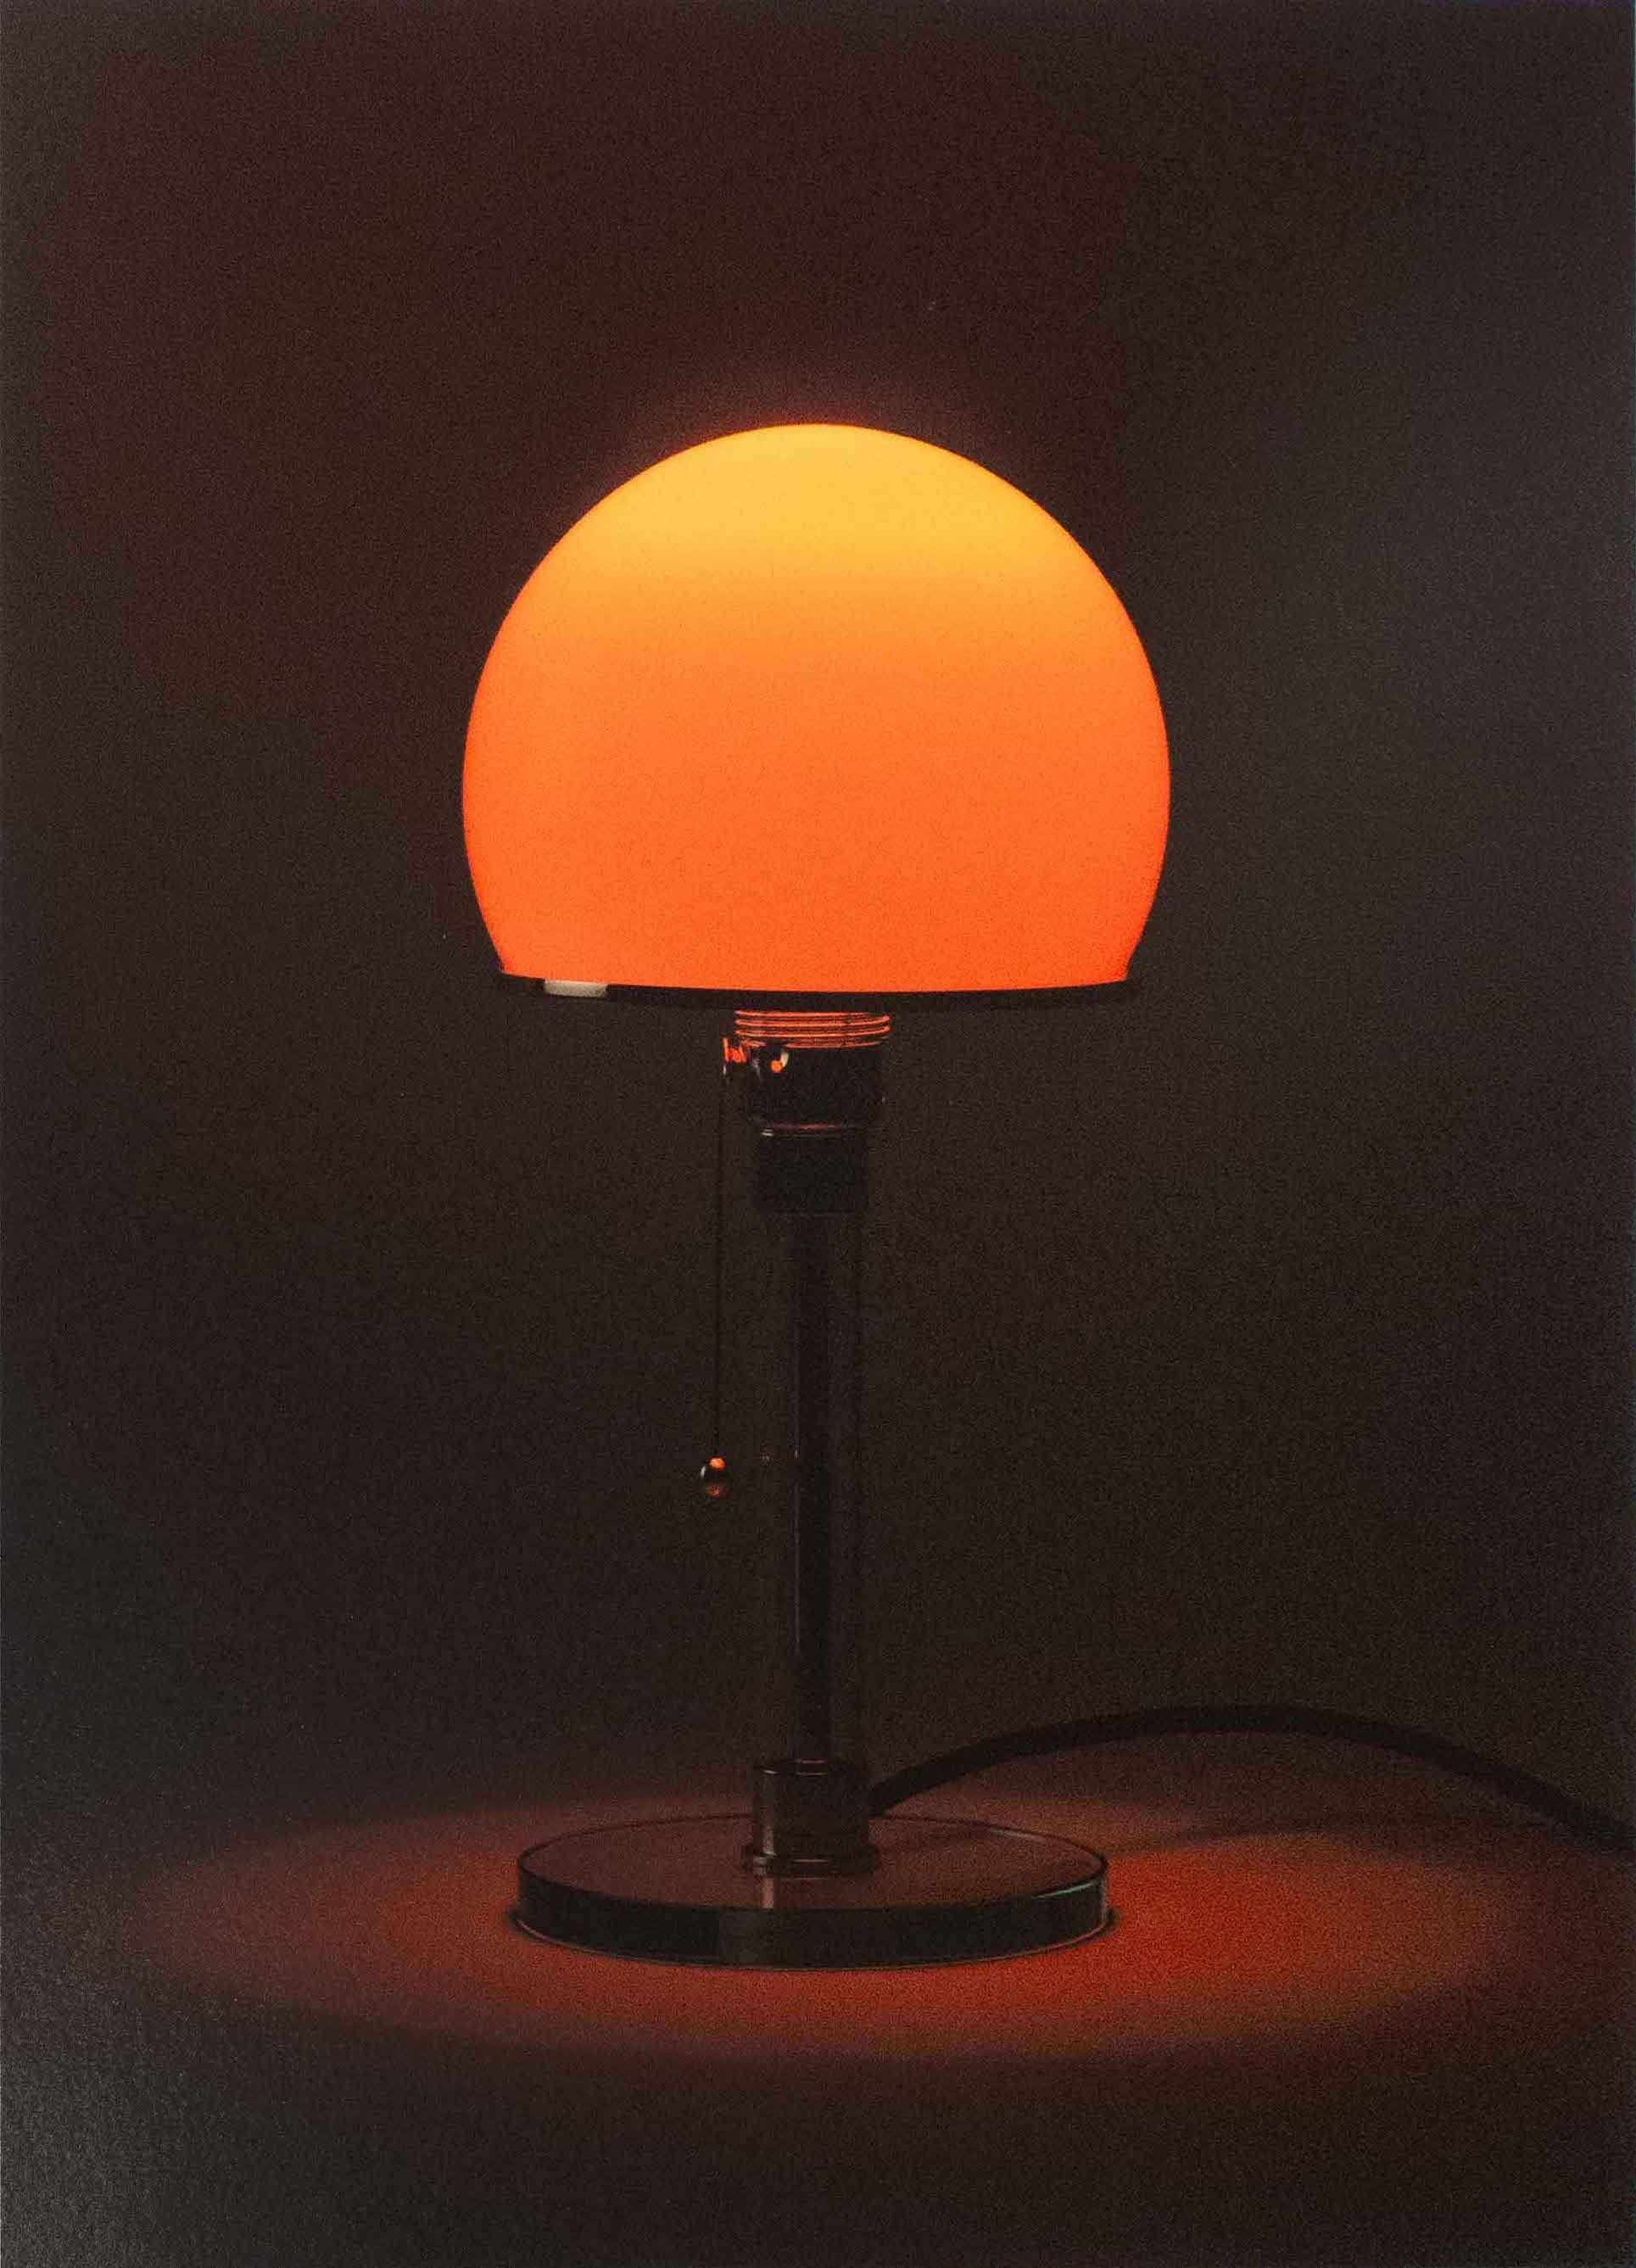 Wagenfeld Sunsets I-VI, 376 B3, 2019, Lampada, Bauhaus